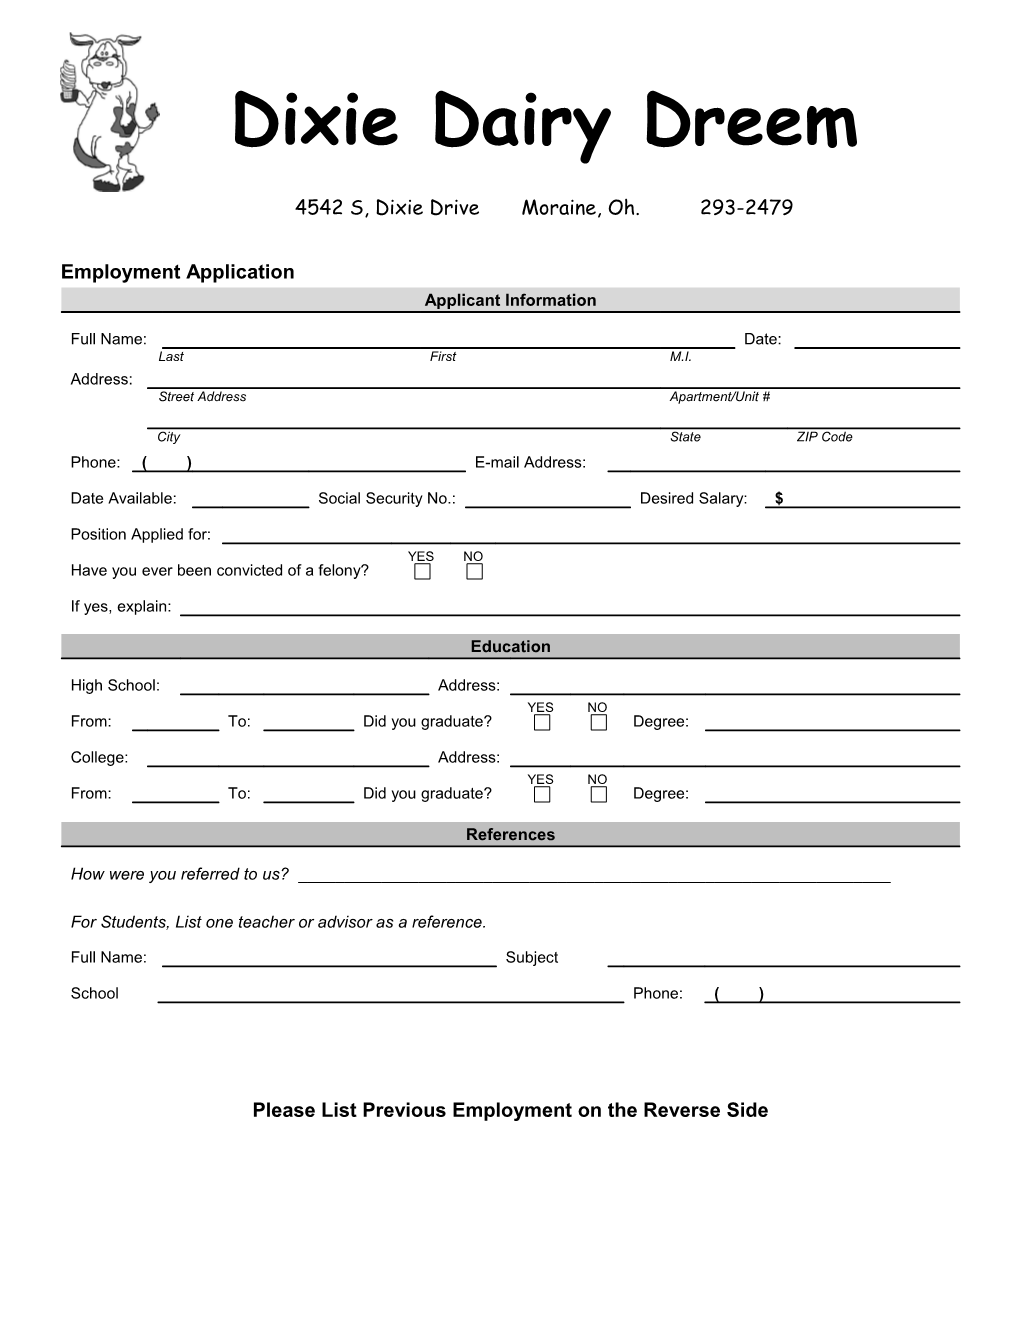 Employment Application s19